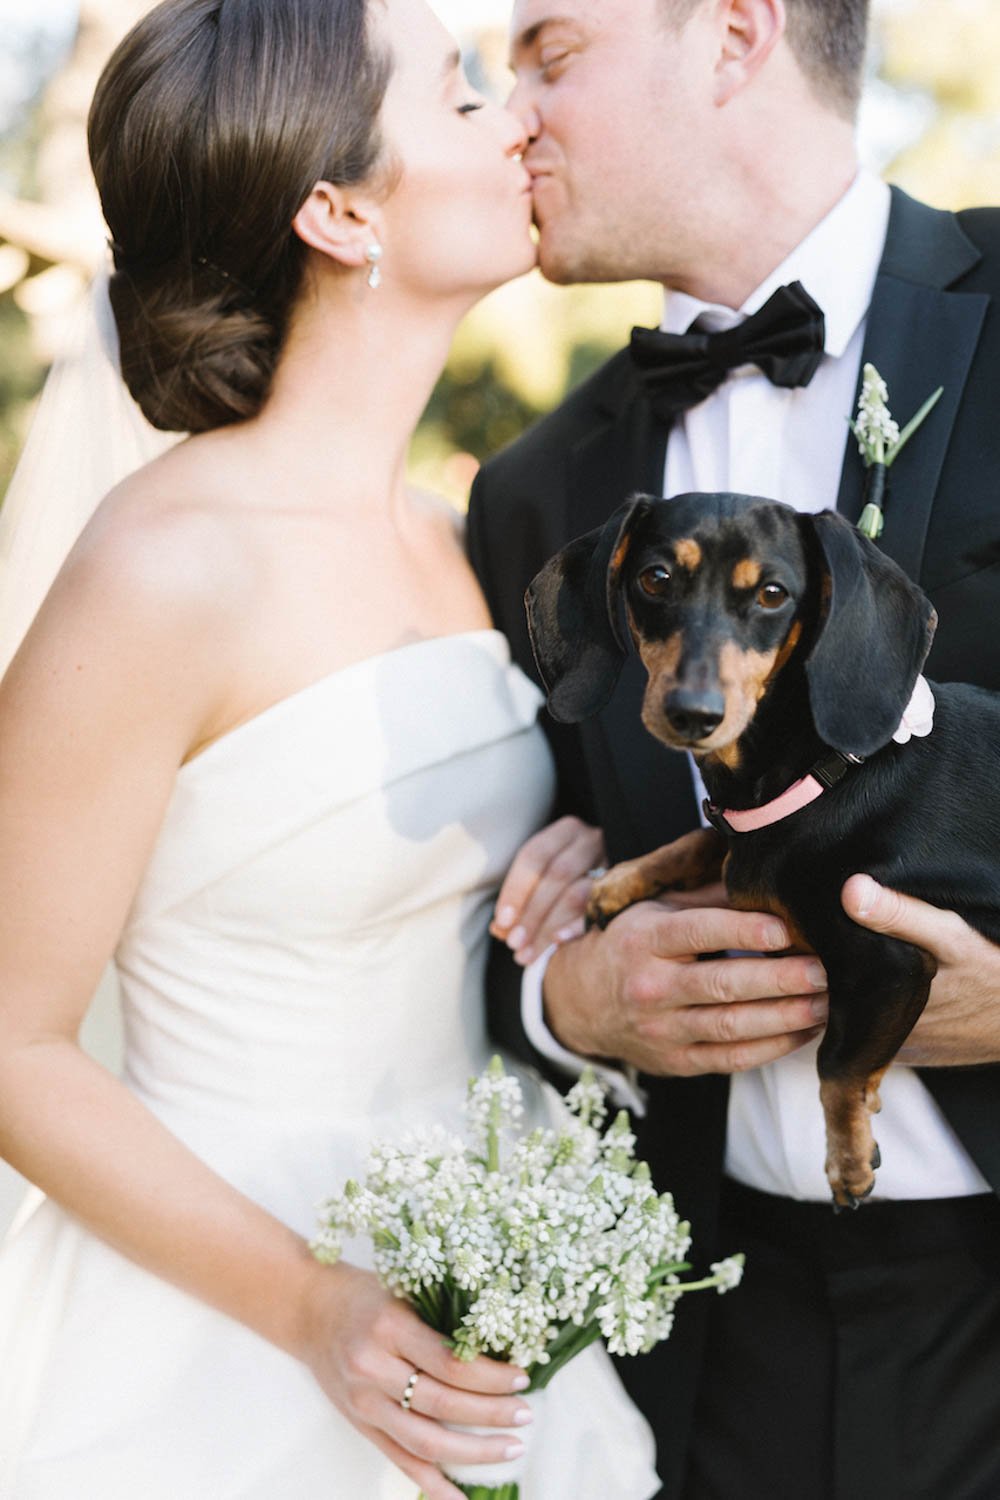 1 Left Puppy in Wedding Ceremony with Couple.jpg